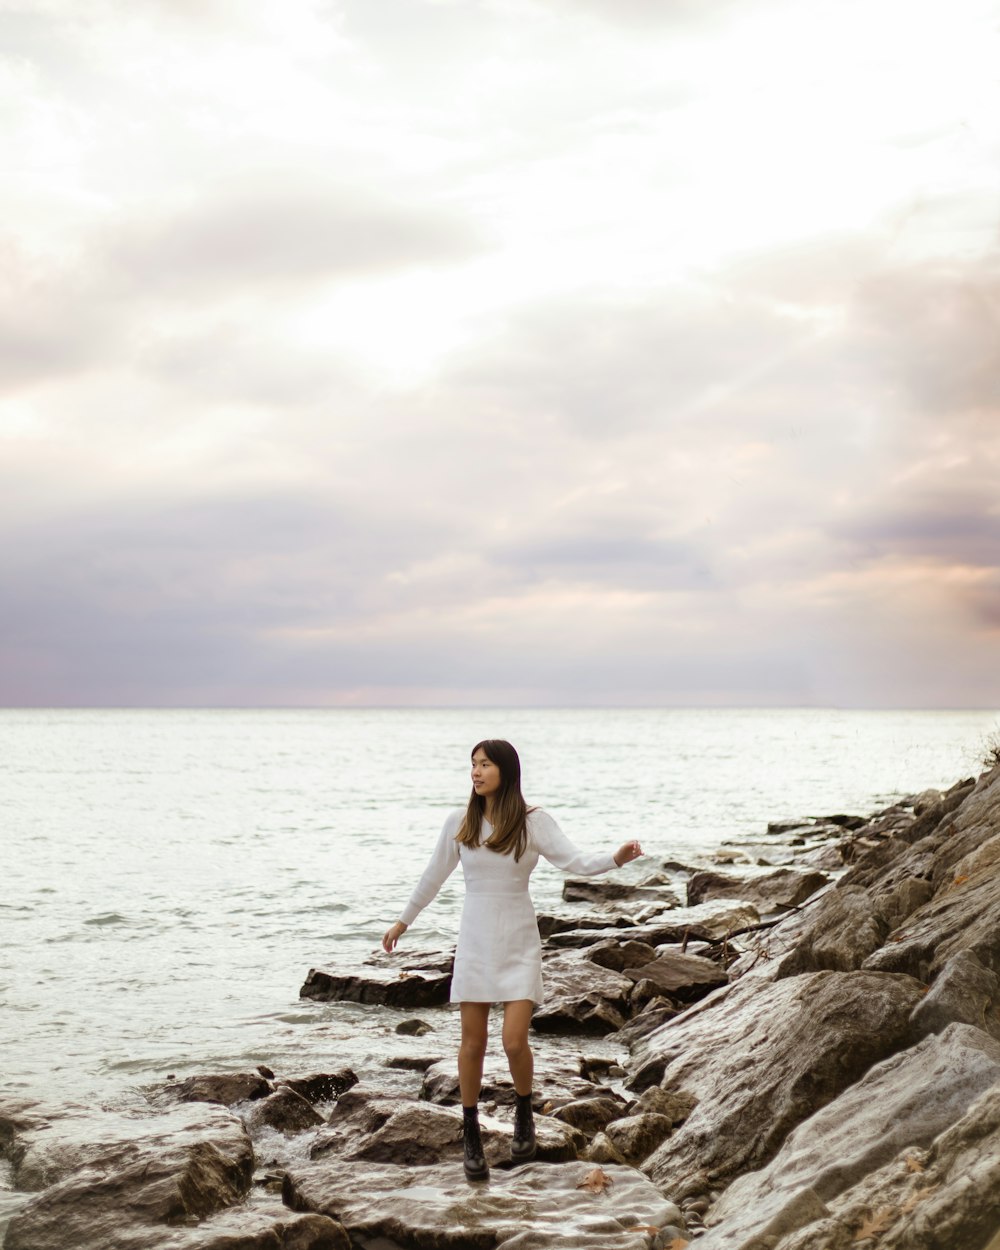 a woman in a white dress standing on rocks near the ocean